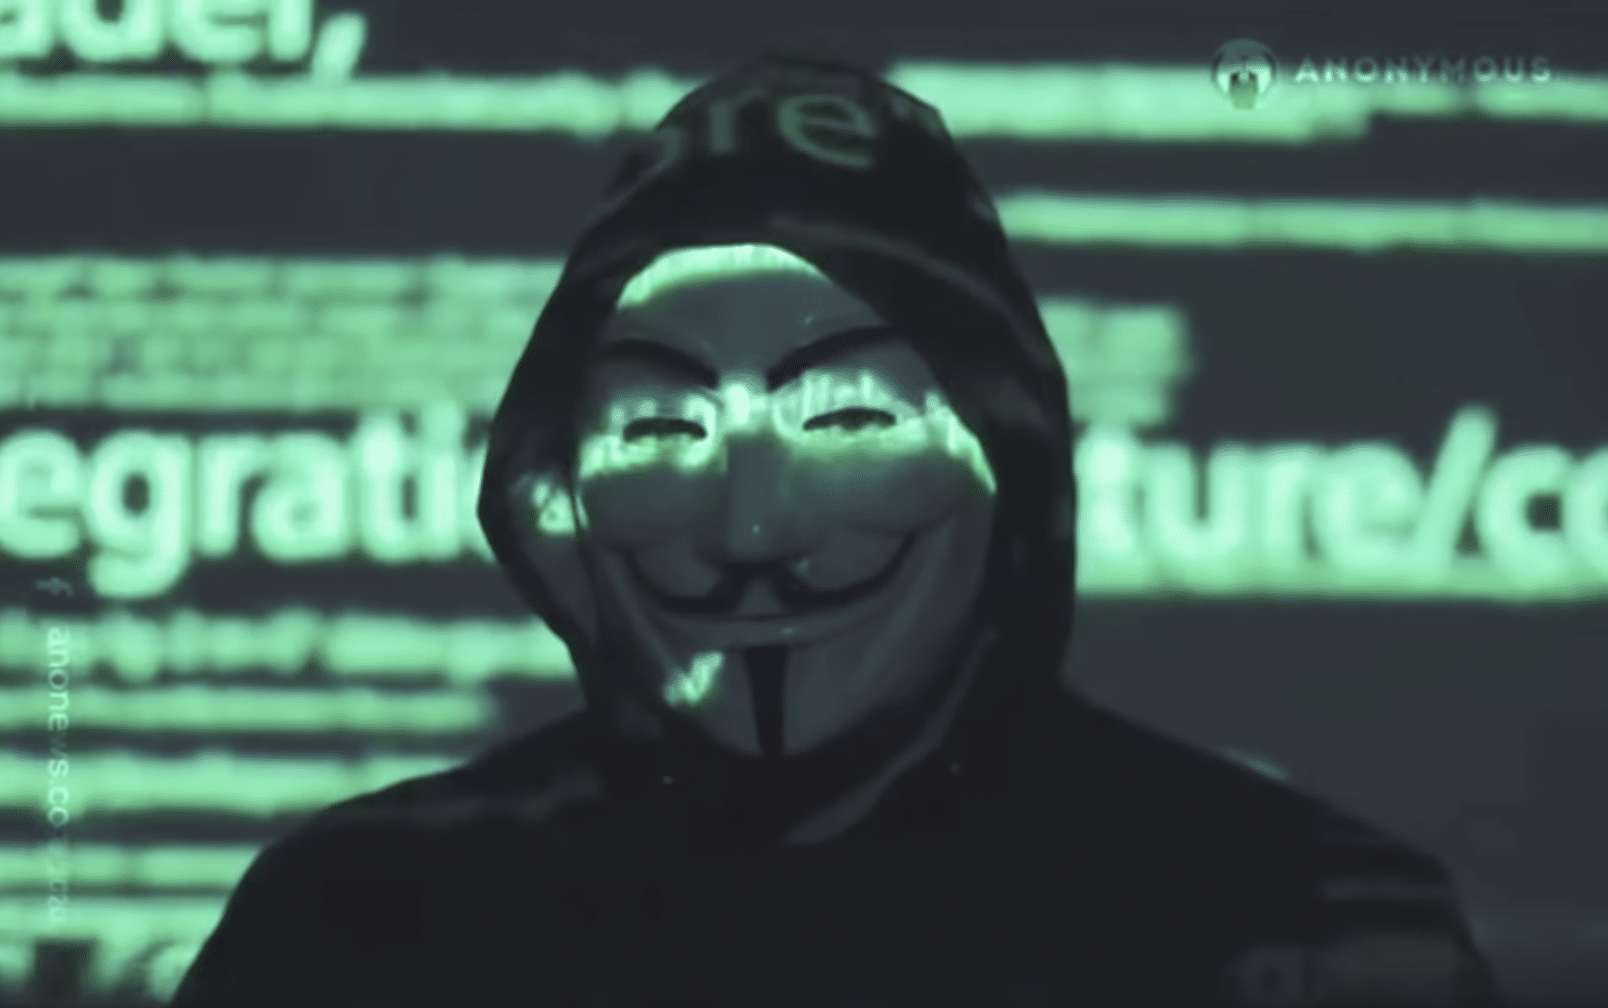 anonymous hacker pod maskou